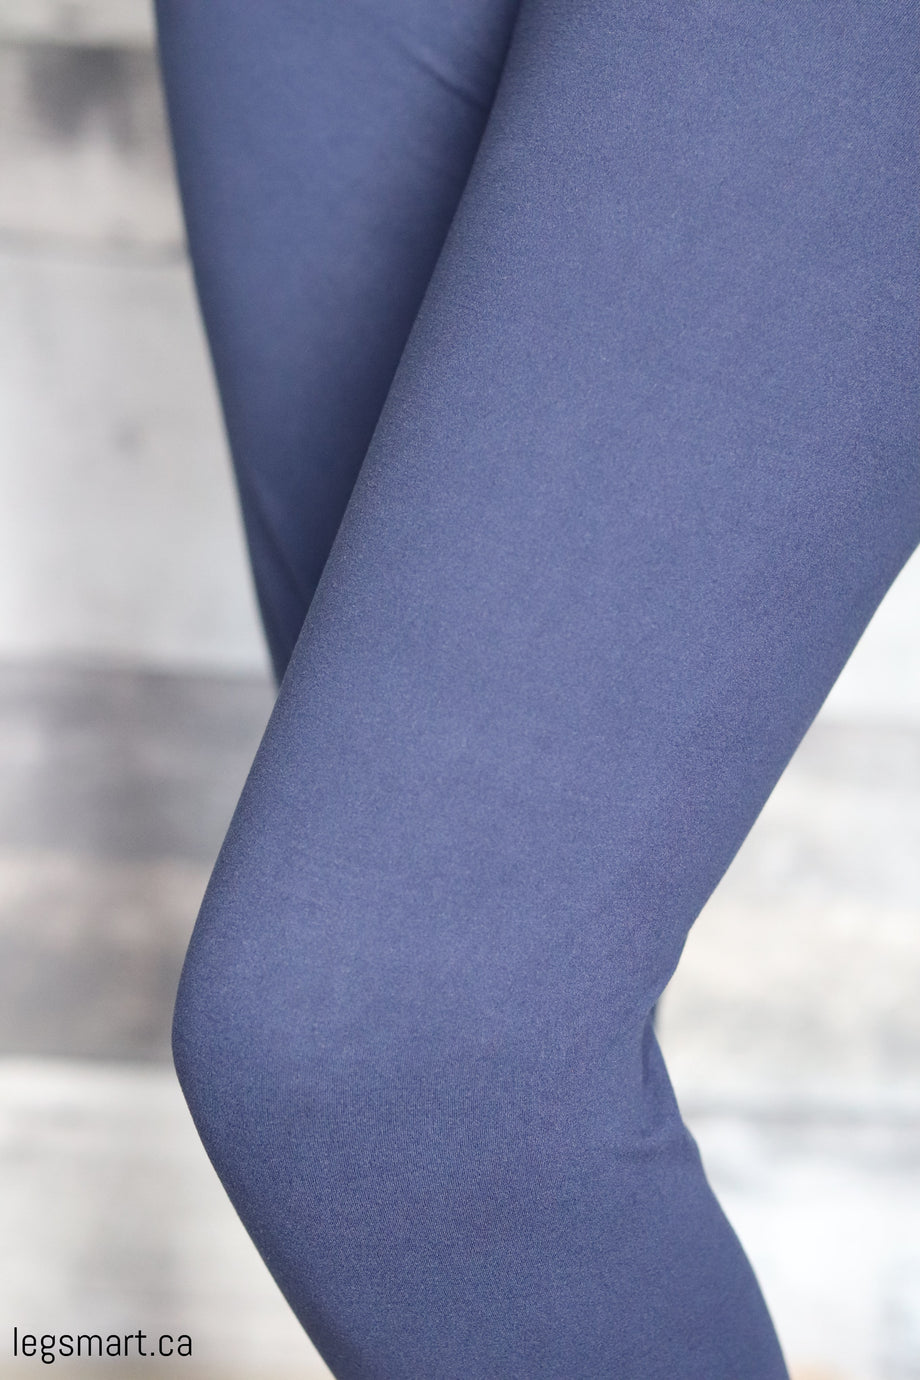 Stylish Leggings Solid Skin Fit Orange Cotton Spandex Capri For Women – SVB  Ventures